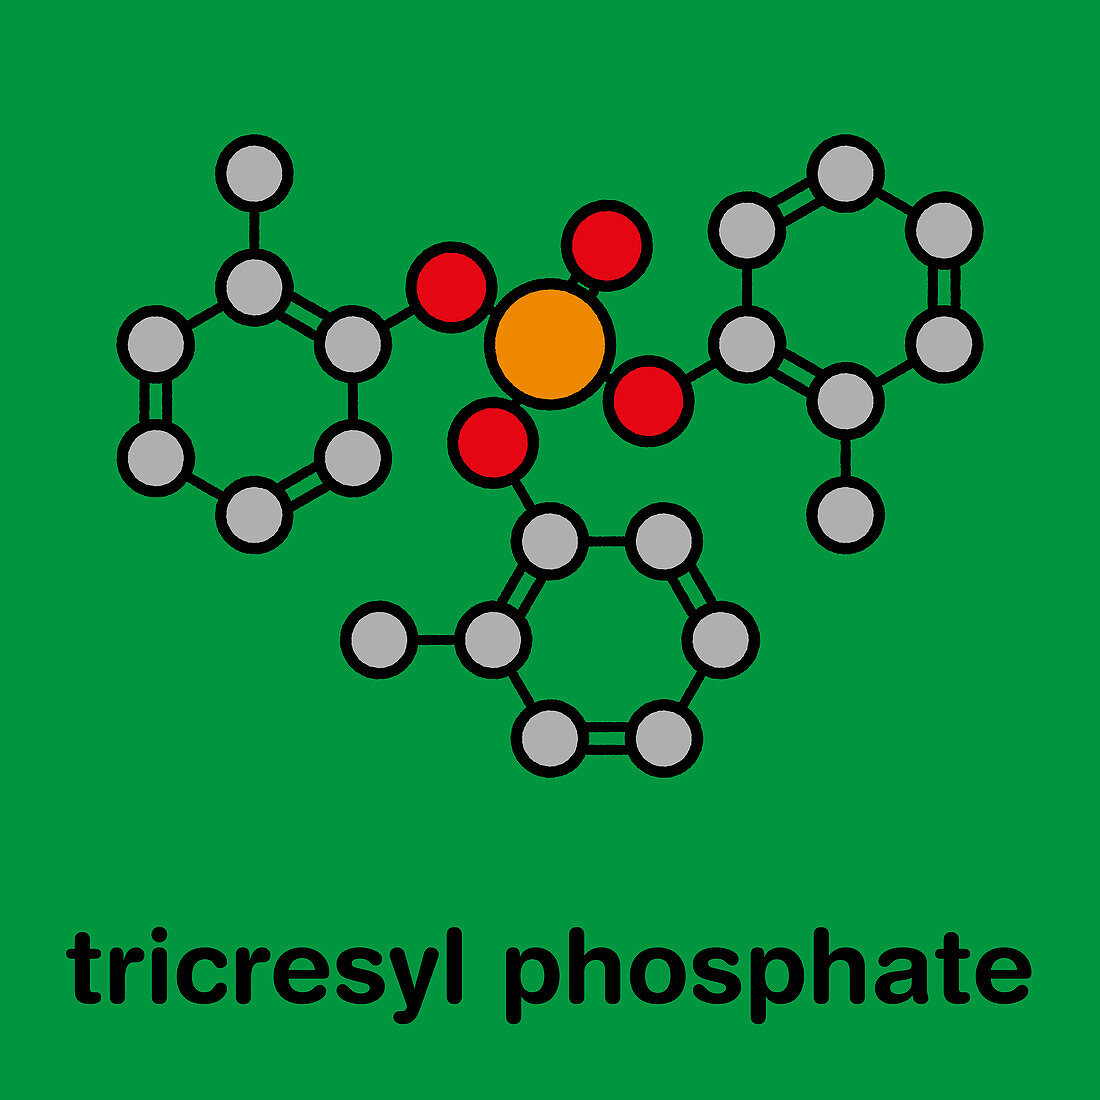 Tricresyl phosphate molecule, illustration